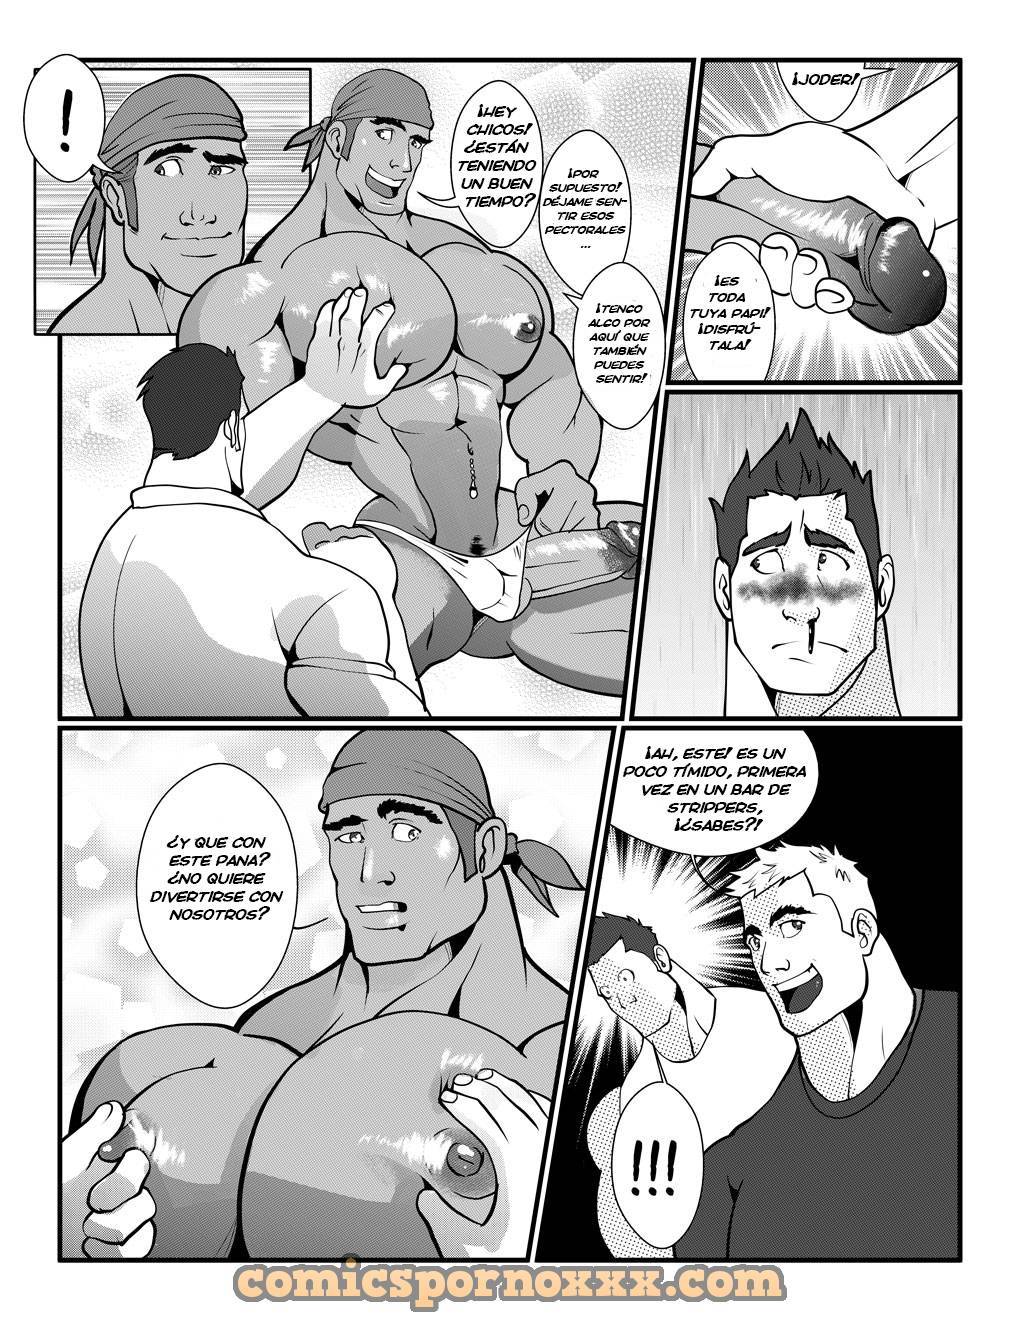 Noche de Strippers Gay - 4 - Comics Porno - Hentai Manga - Cartoon XXX